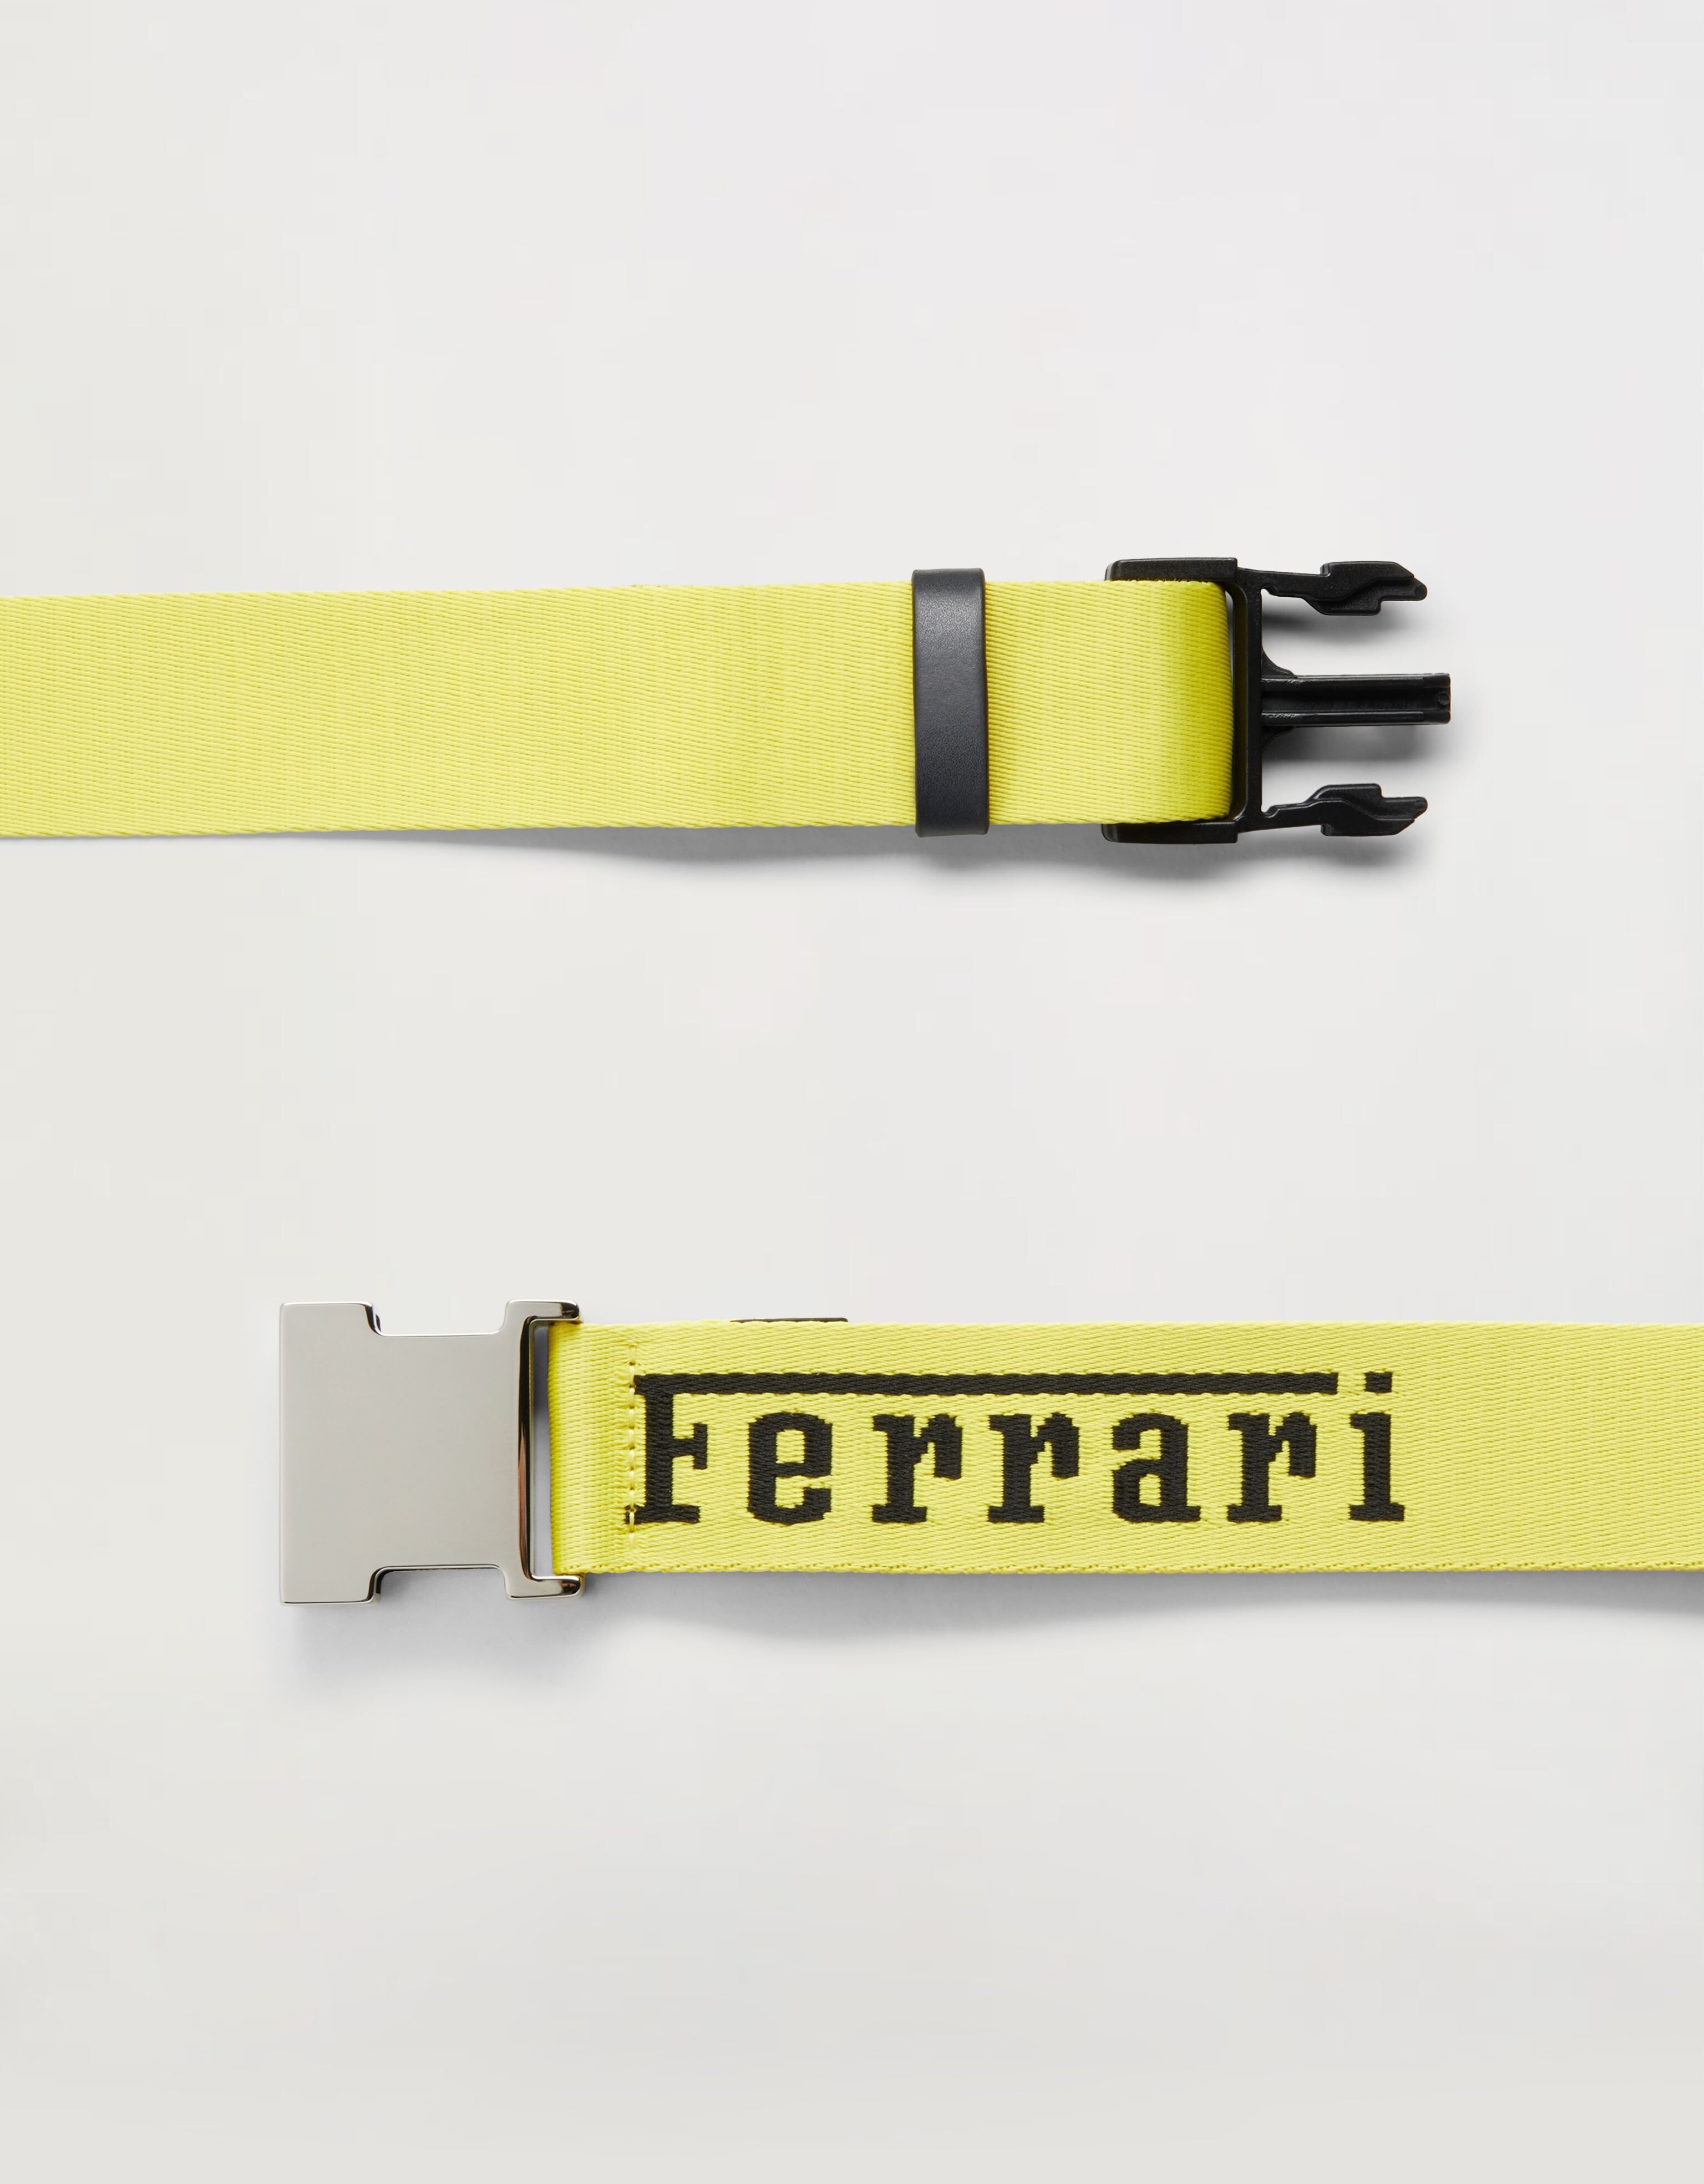 Ferrari Gürtel aus Textilband mit Ferrari-Logo Gelb 20017f